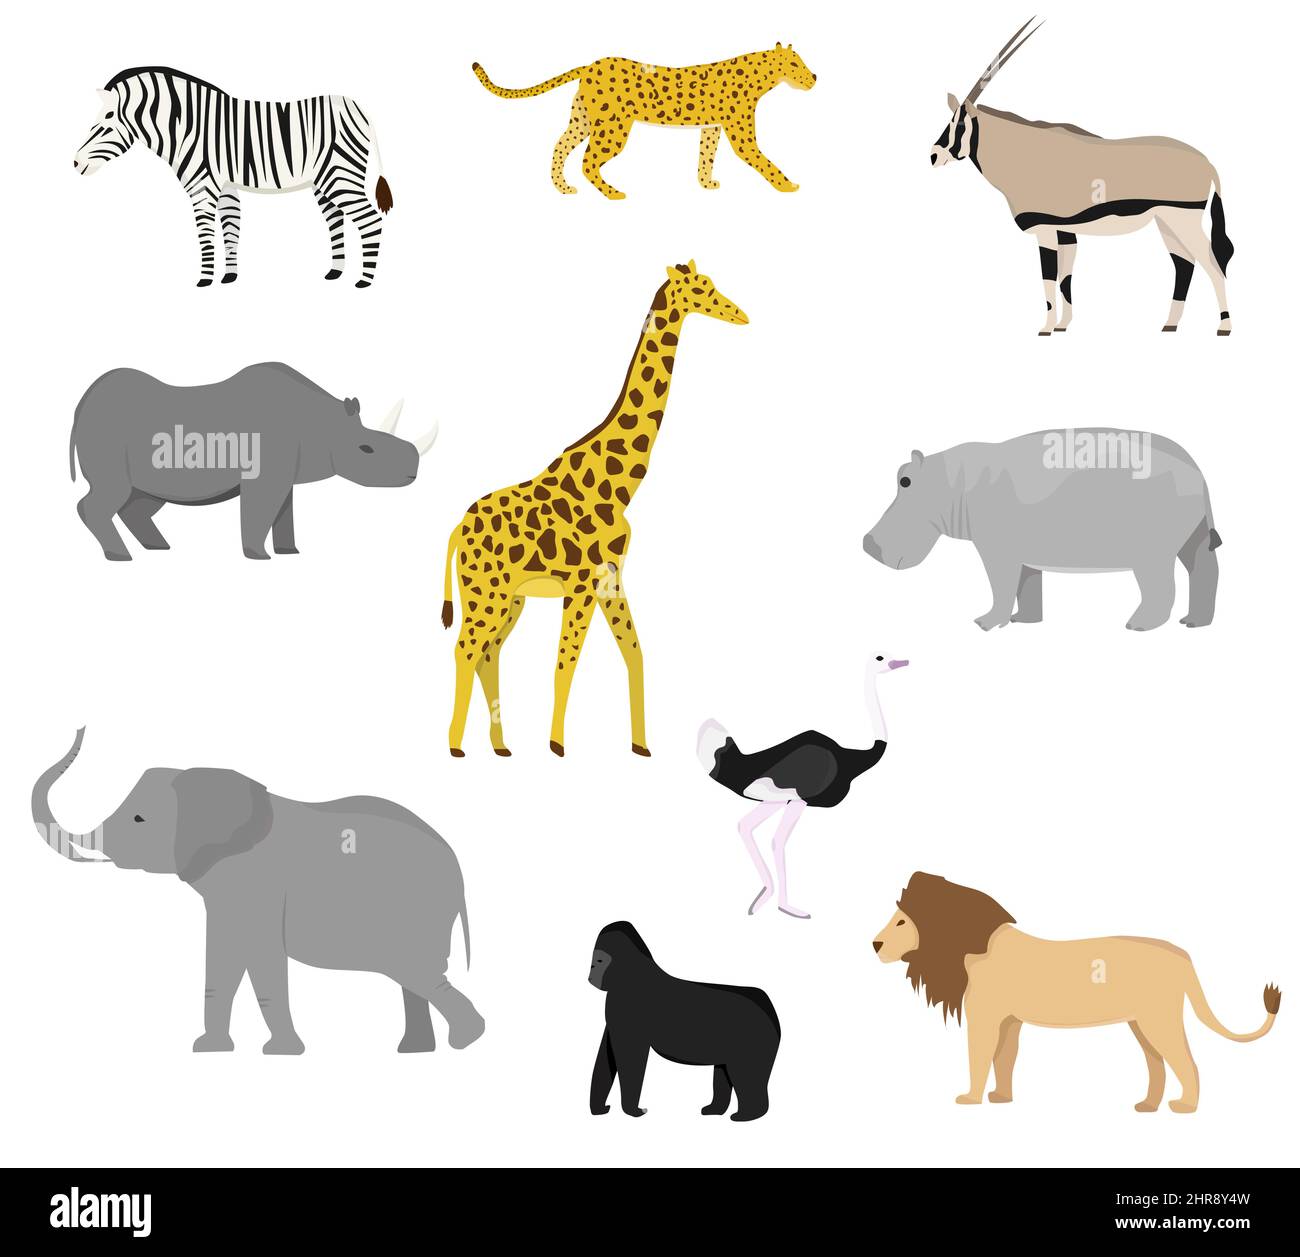 Set with African wild animals. Flat style. Giraffe, elephant, hippo, rhinoceros, zebra, monkey, orangutan, antelope, cheetah, lion, leopard, ostrich. Stock Vector